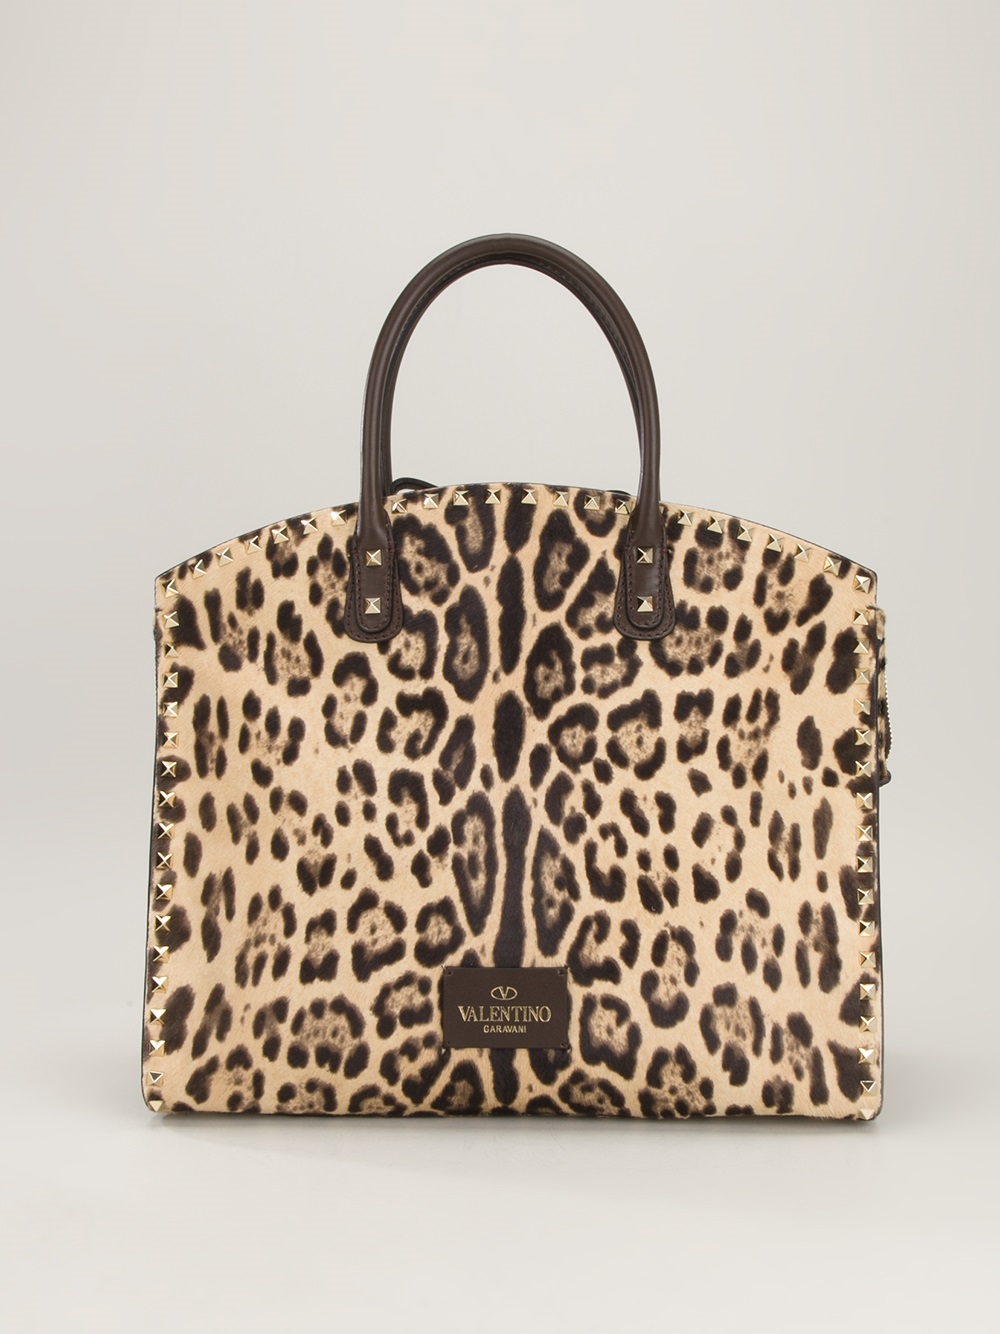 Valentino Rockstud Leopard Print Tote in Natural | Lyst